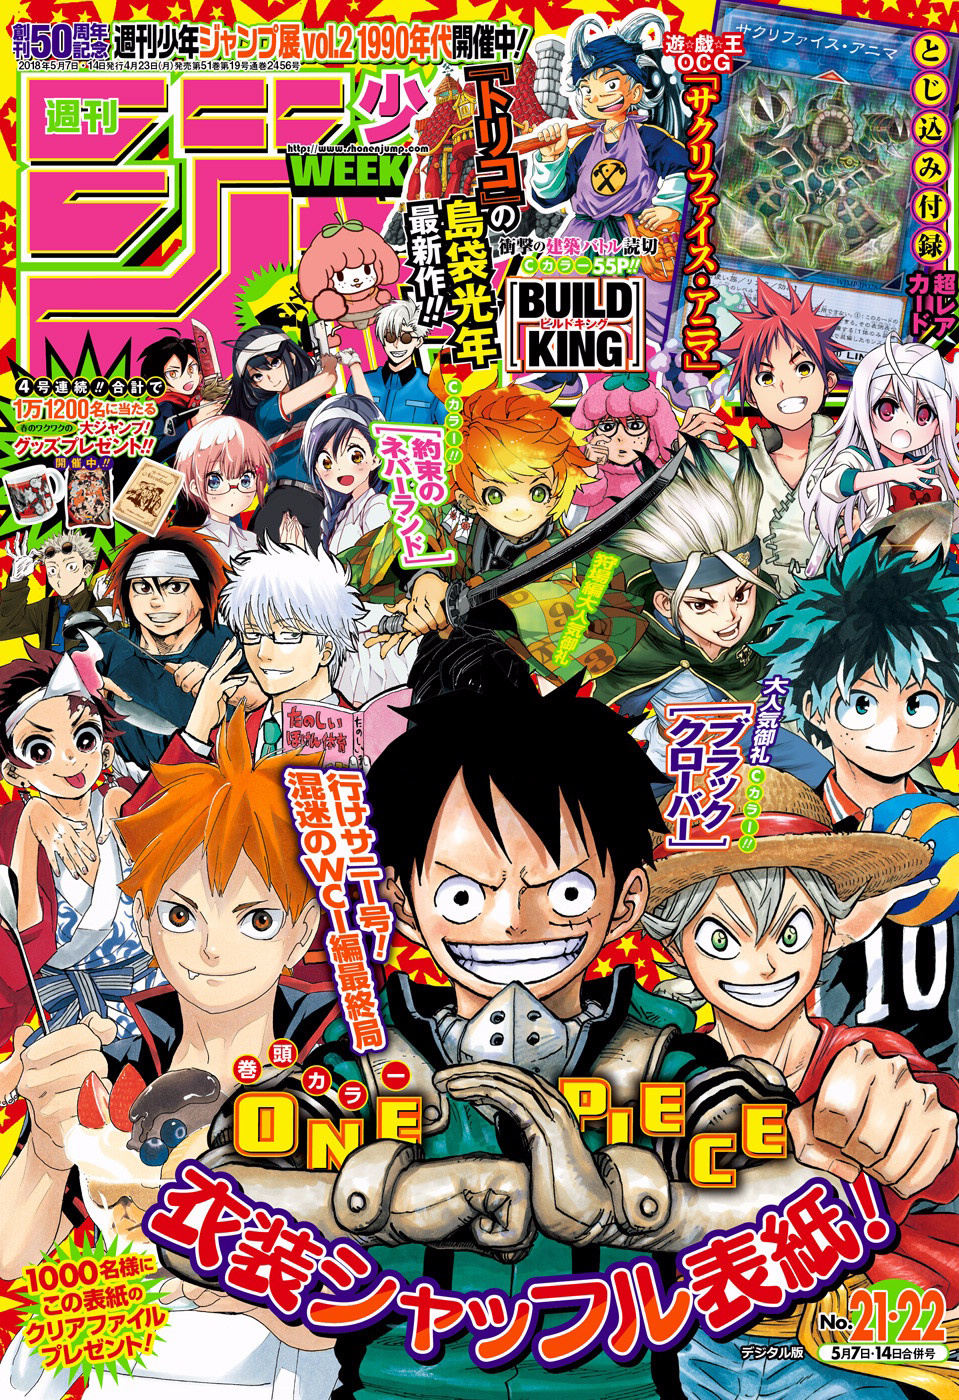 Weekly Shonen Jump Issue 21-22, 2018 | Jump Database | Fandom